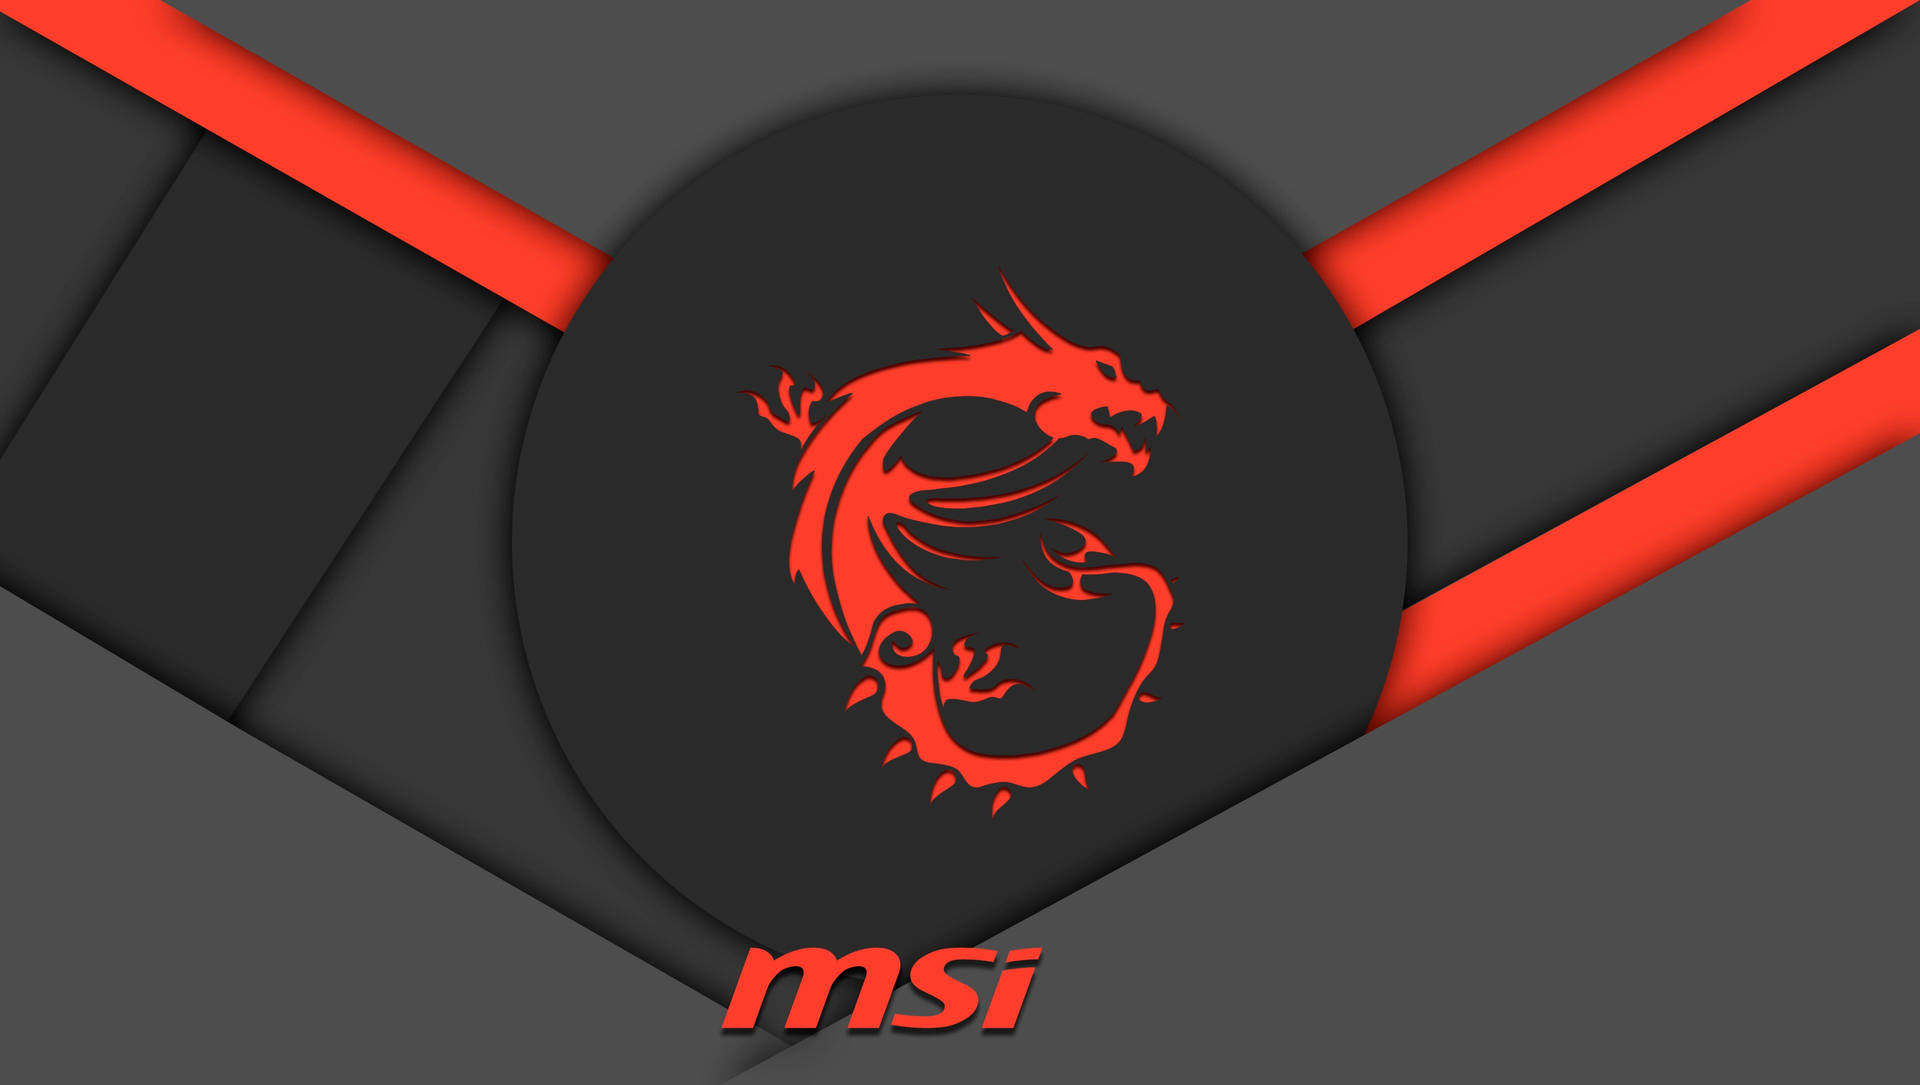 Msi 4k Red Dragon Banner Background